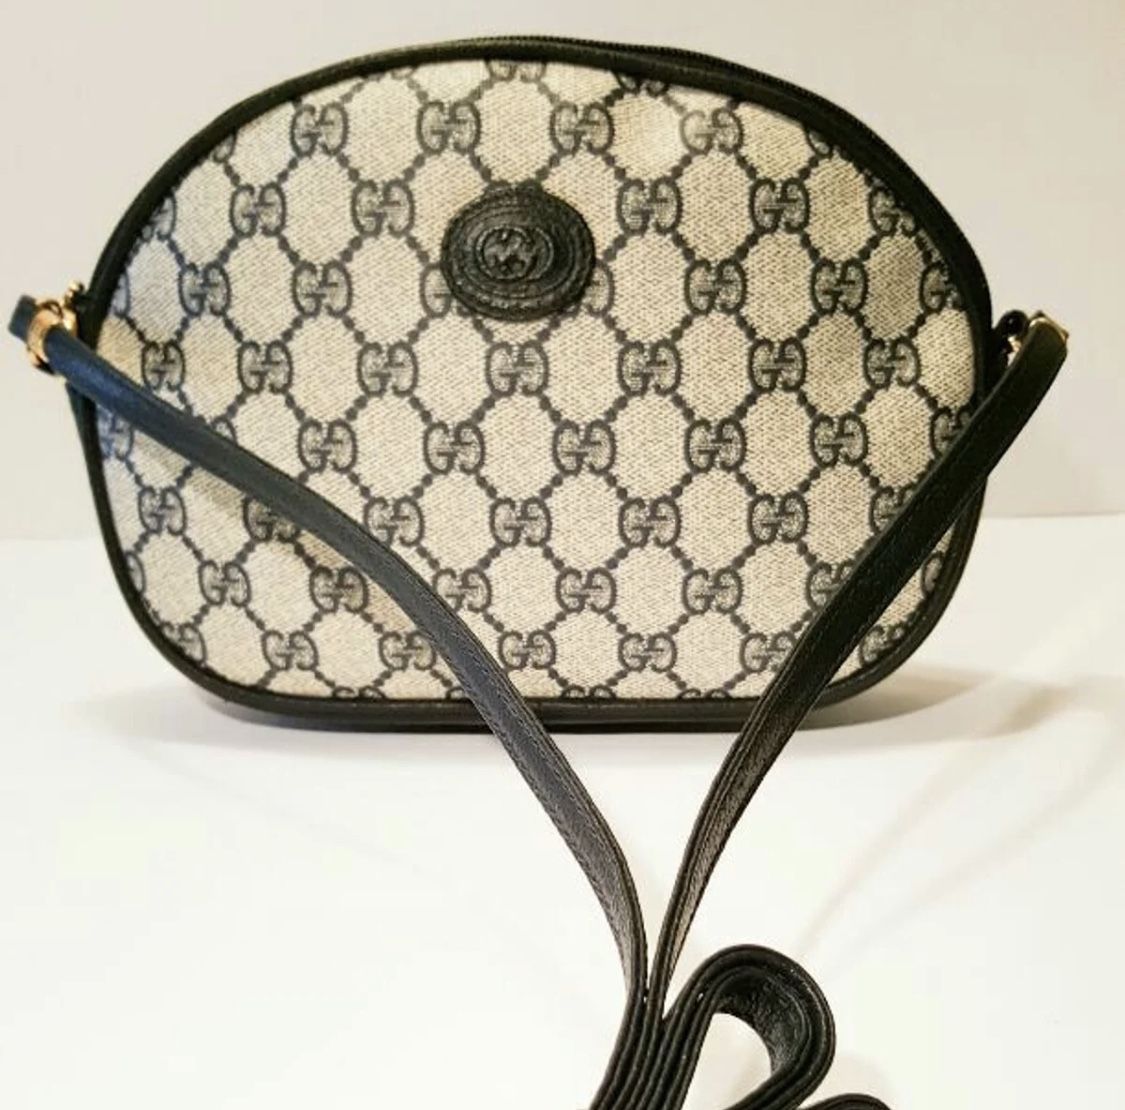 Authentic Vintage Gucci Crossbody Bag